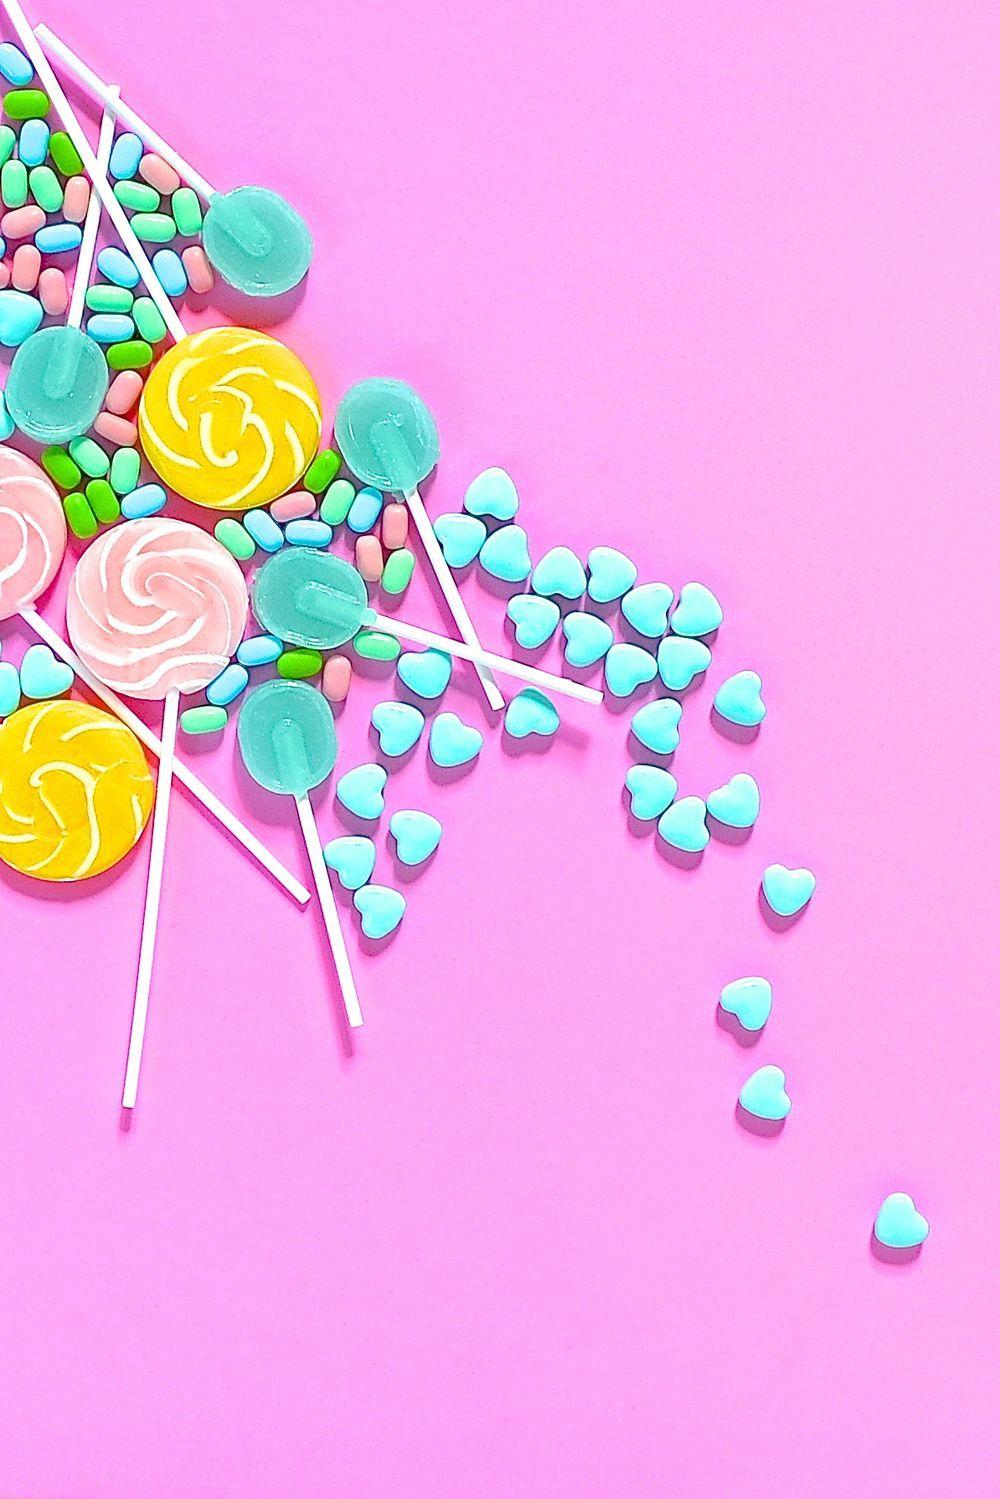 Sweet As Sugar- Wallpaper Download